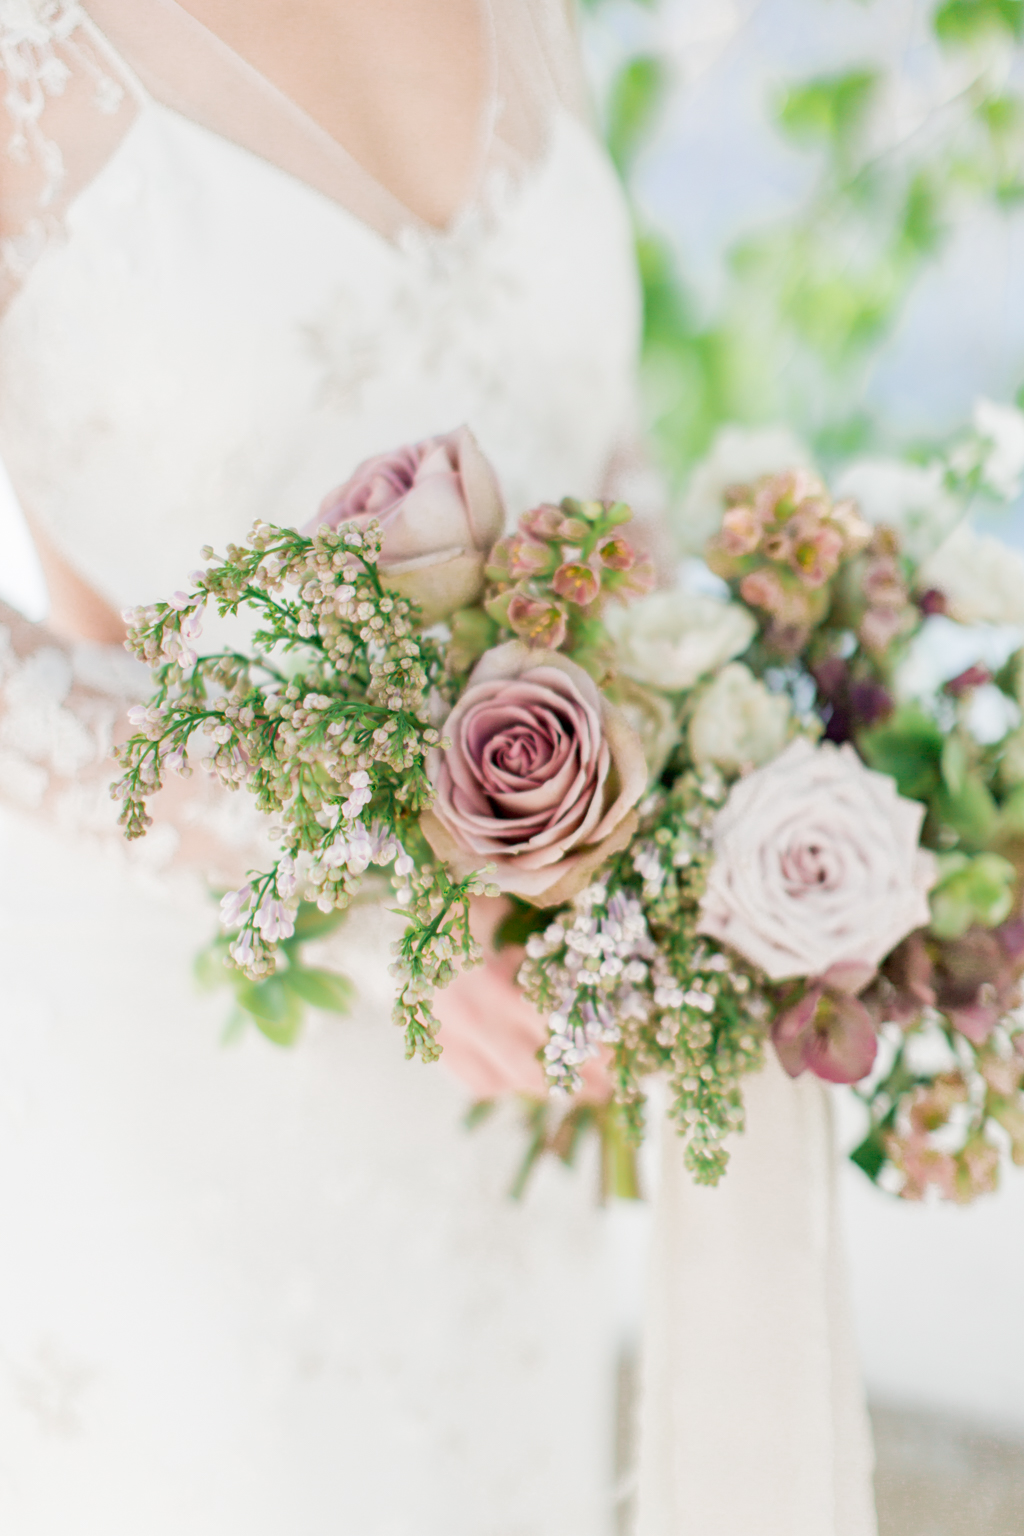 Floral Design - halifax wedding photographers